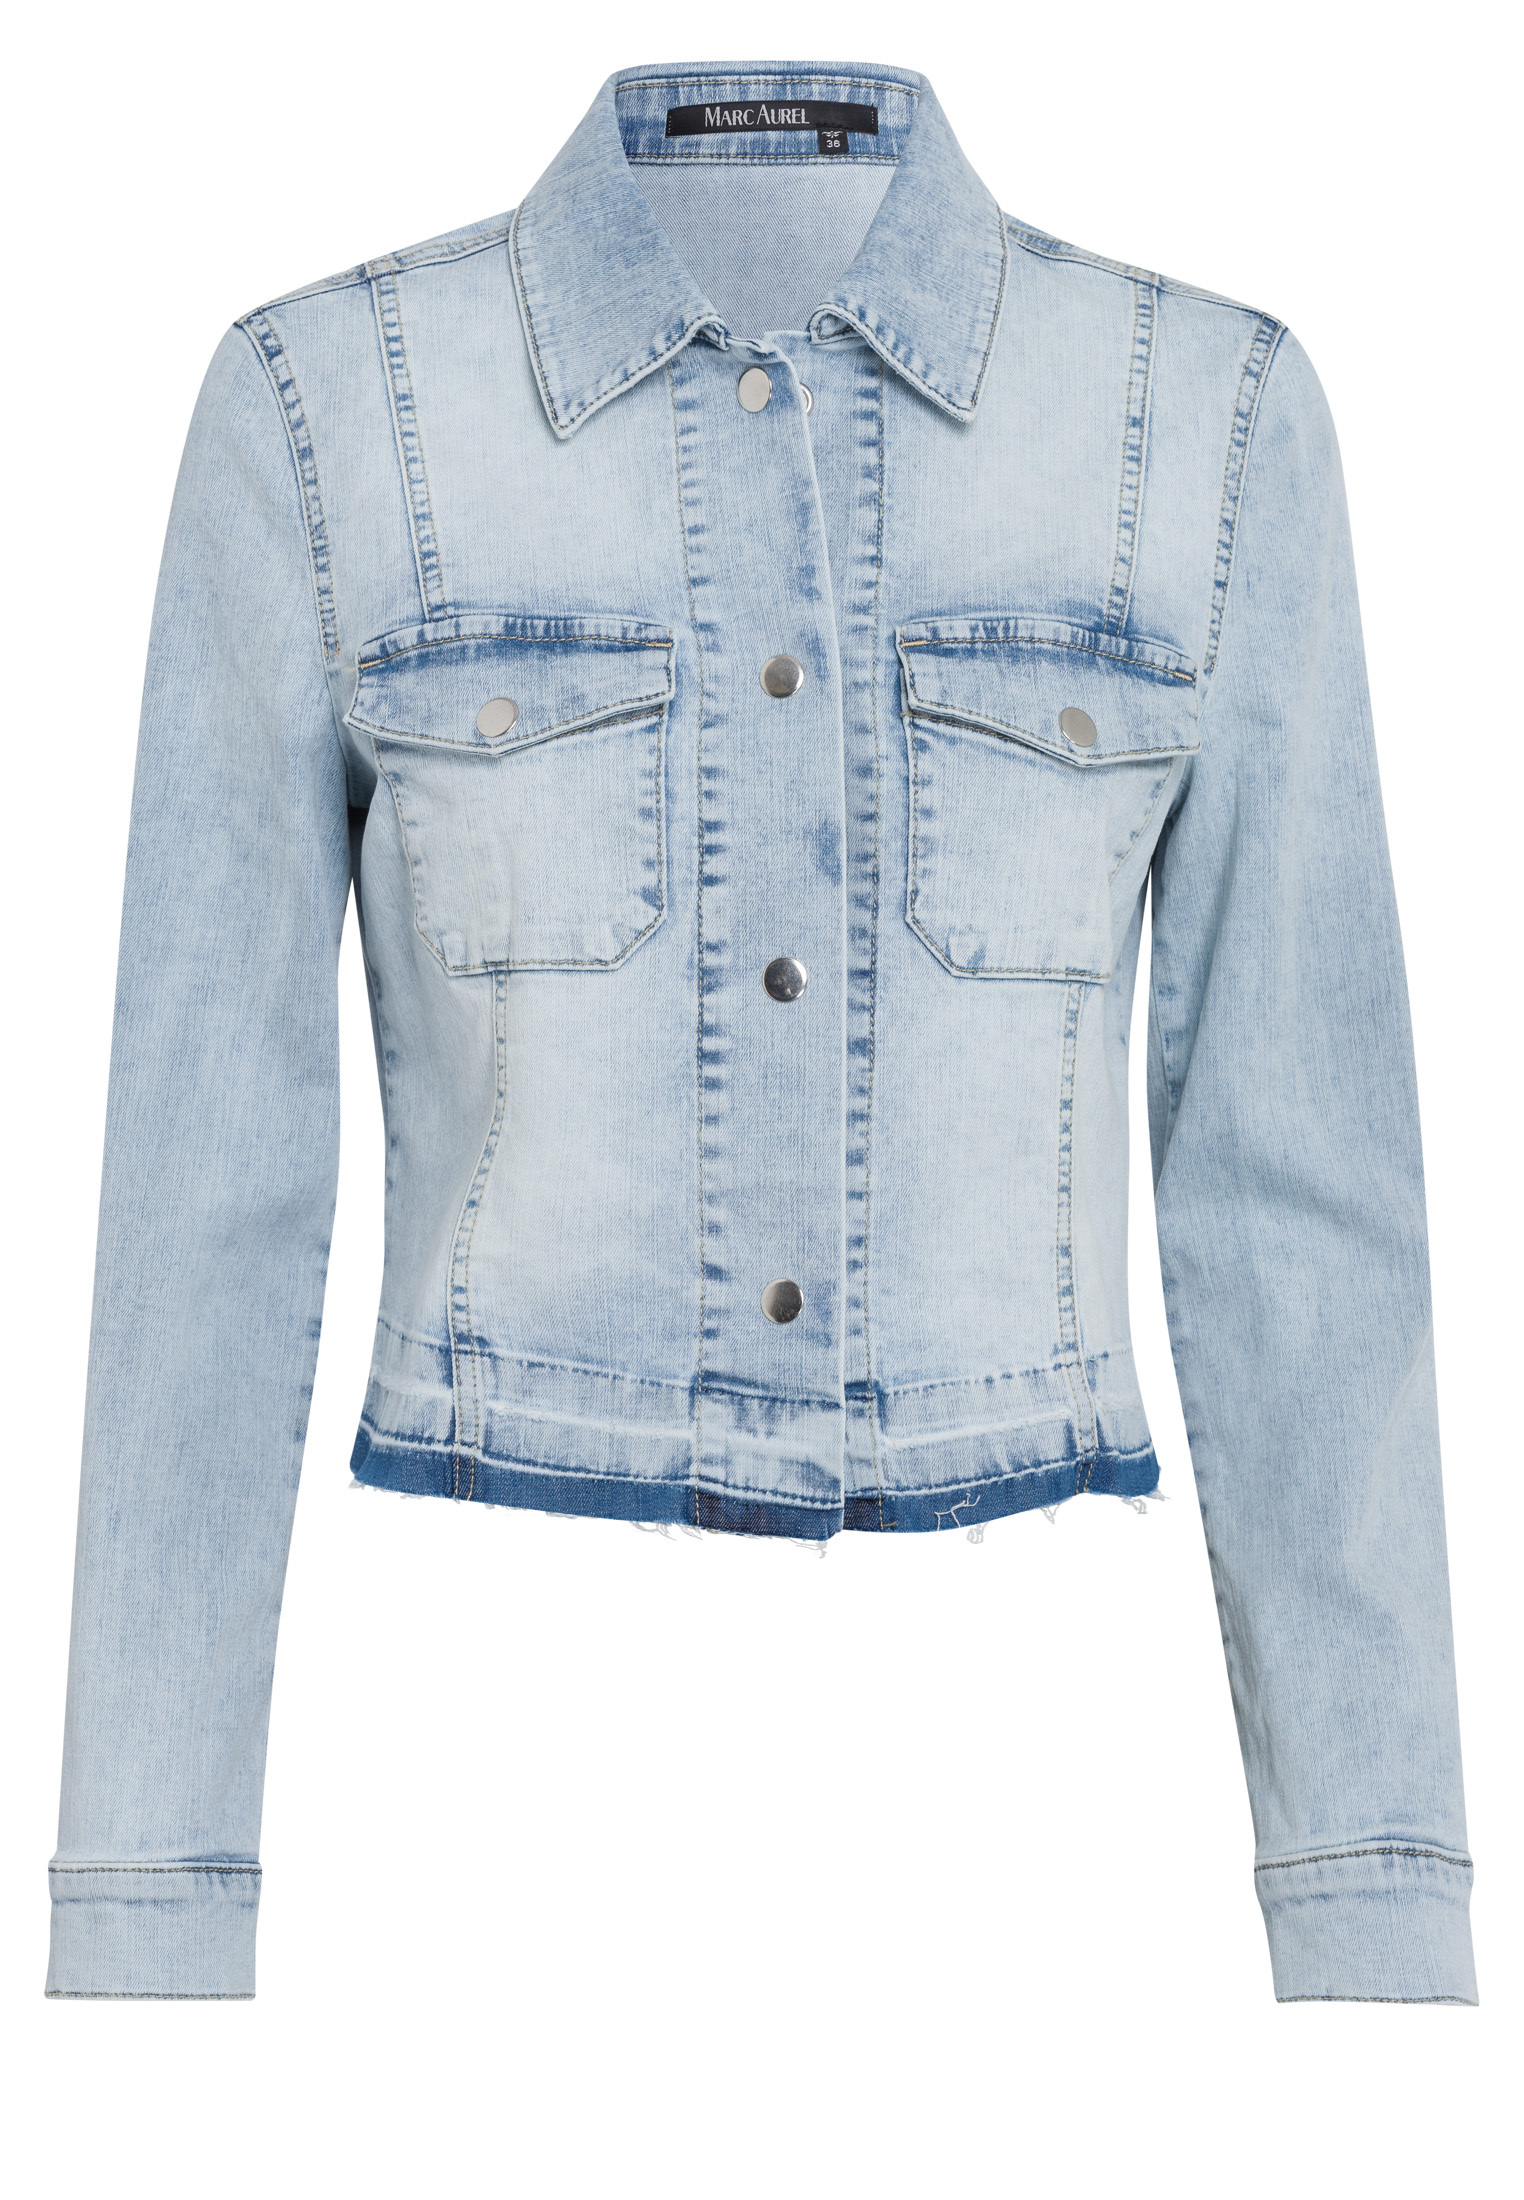 Jeans Jacket with back-print | Blazer & Jackets | Fashion